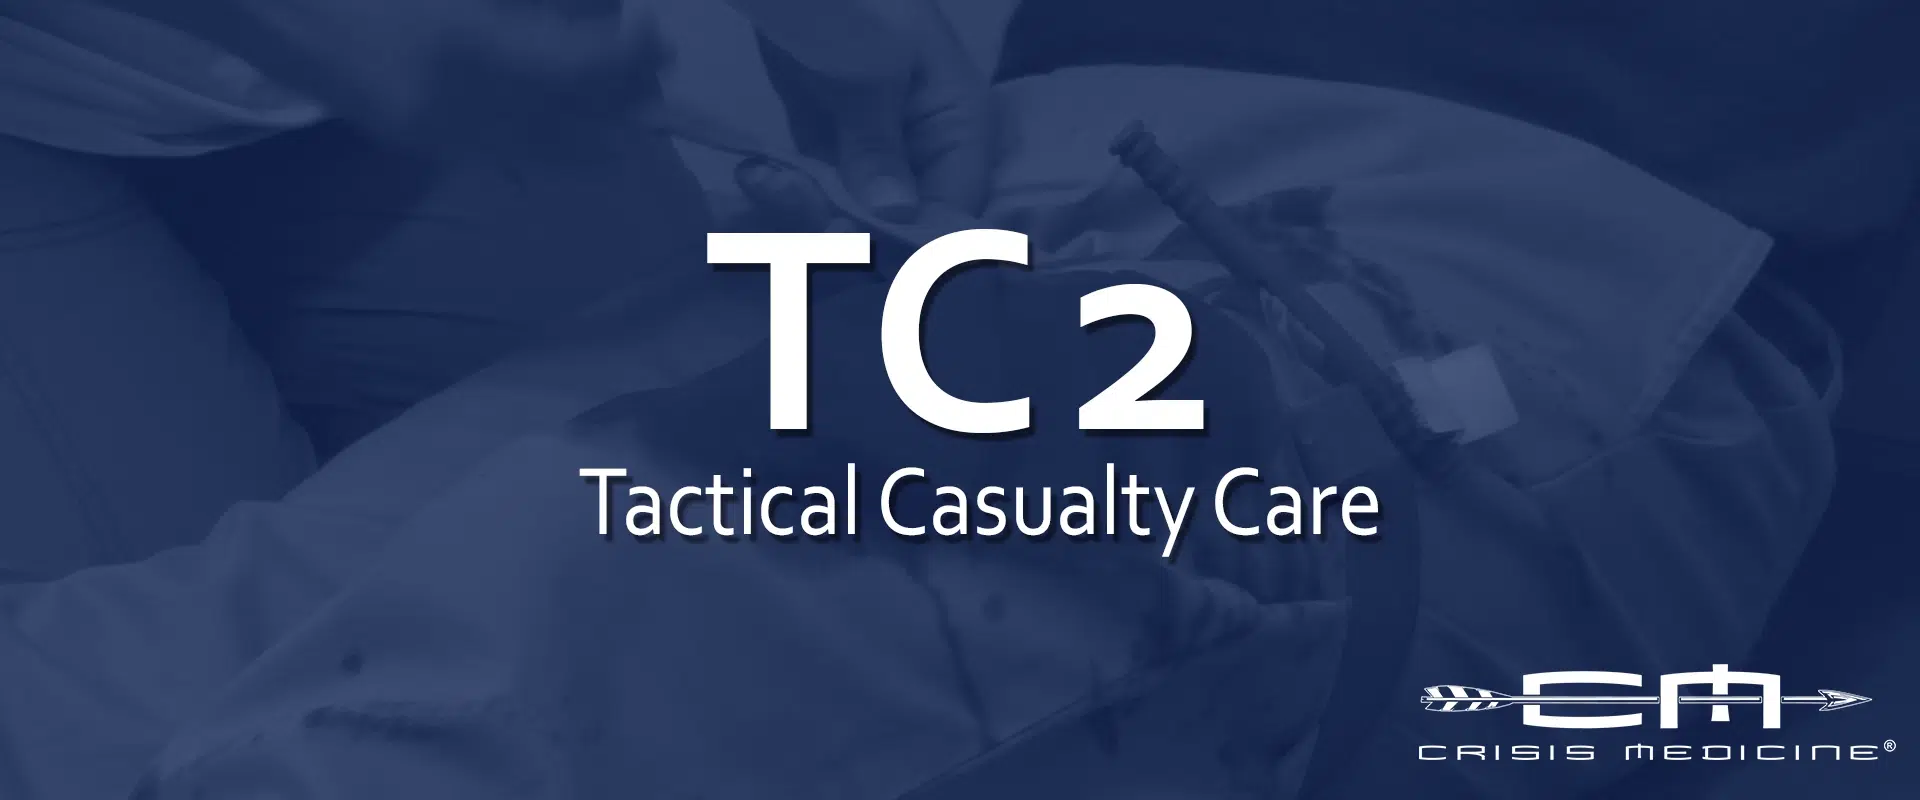 Crisis Medicine Tactical Casualty Care